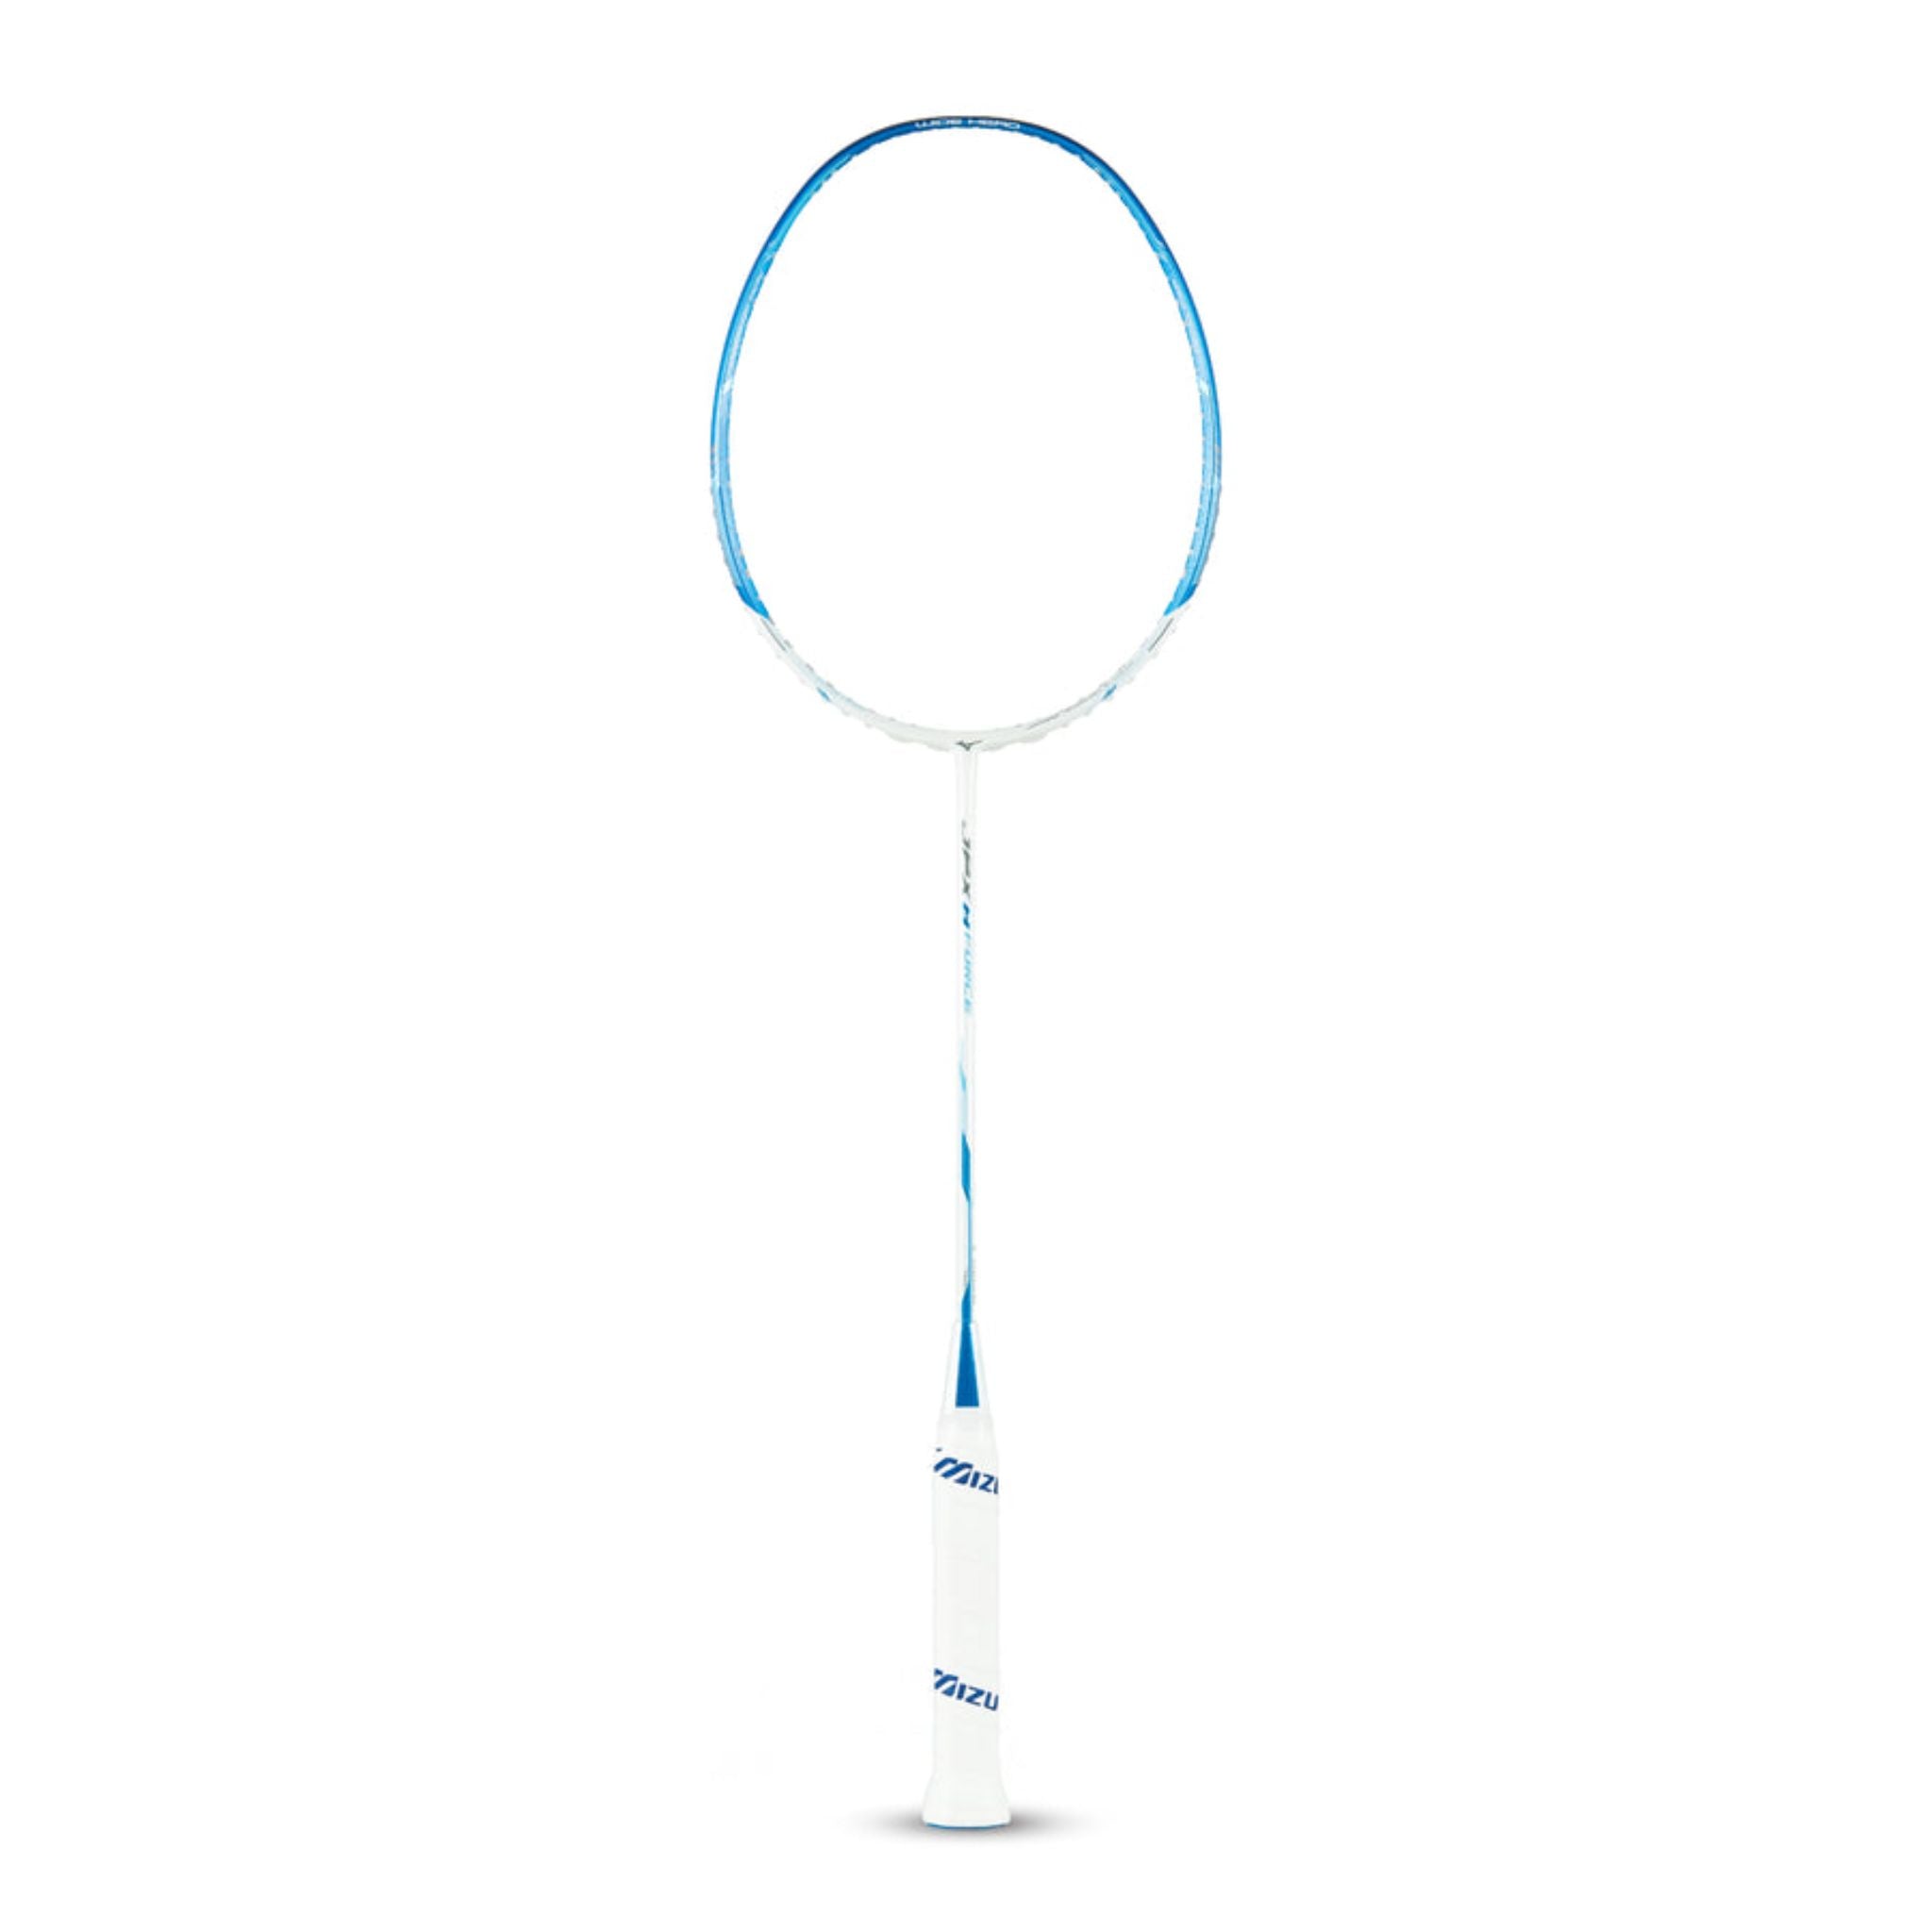 Mizuno JPX 8 Force Badminton Racket